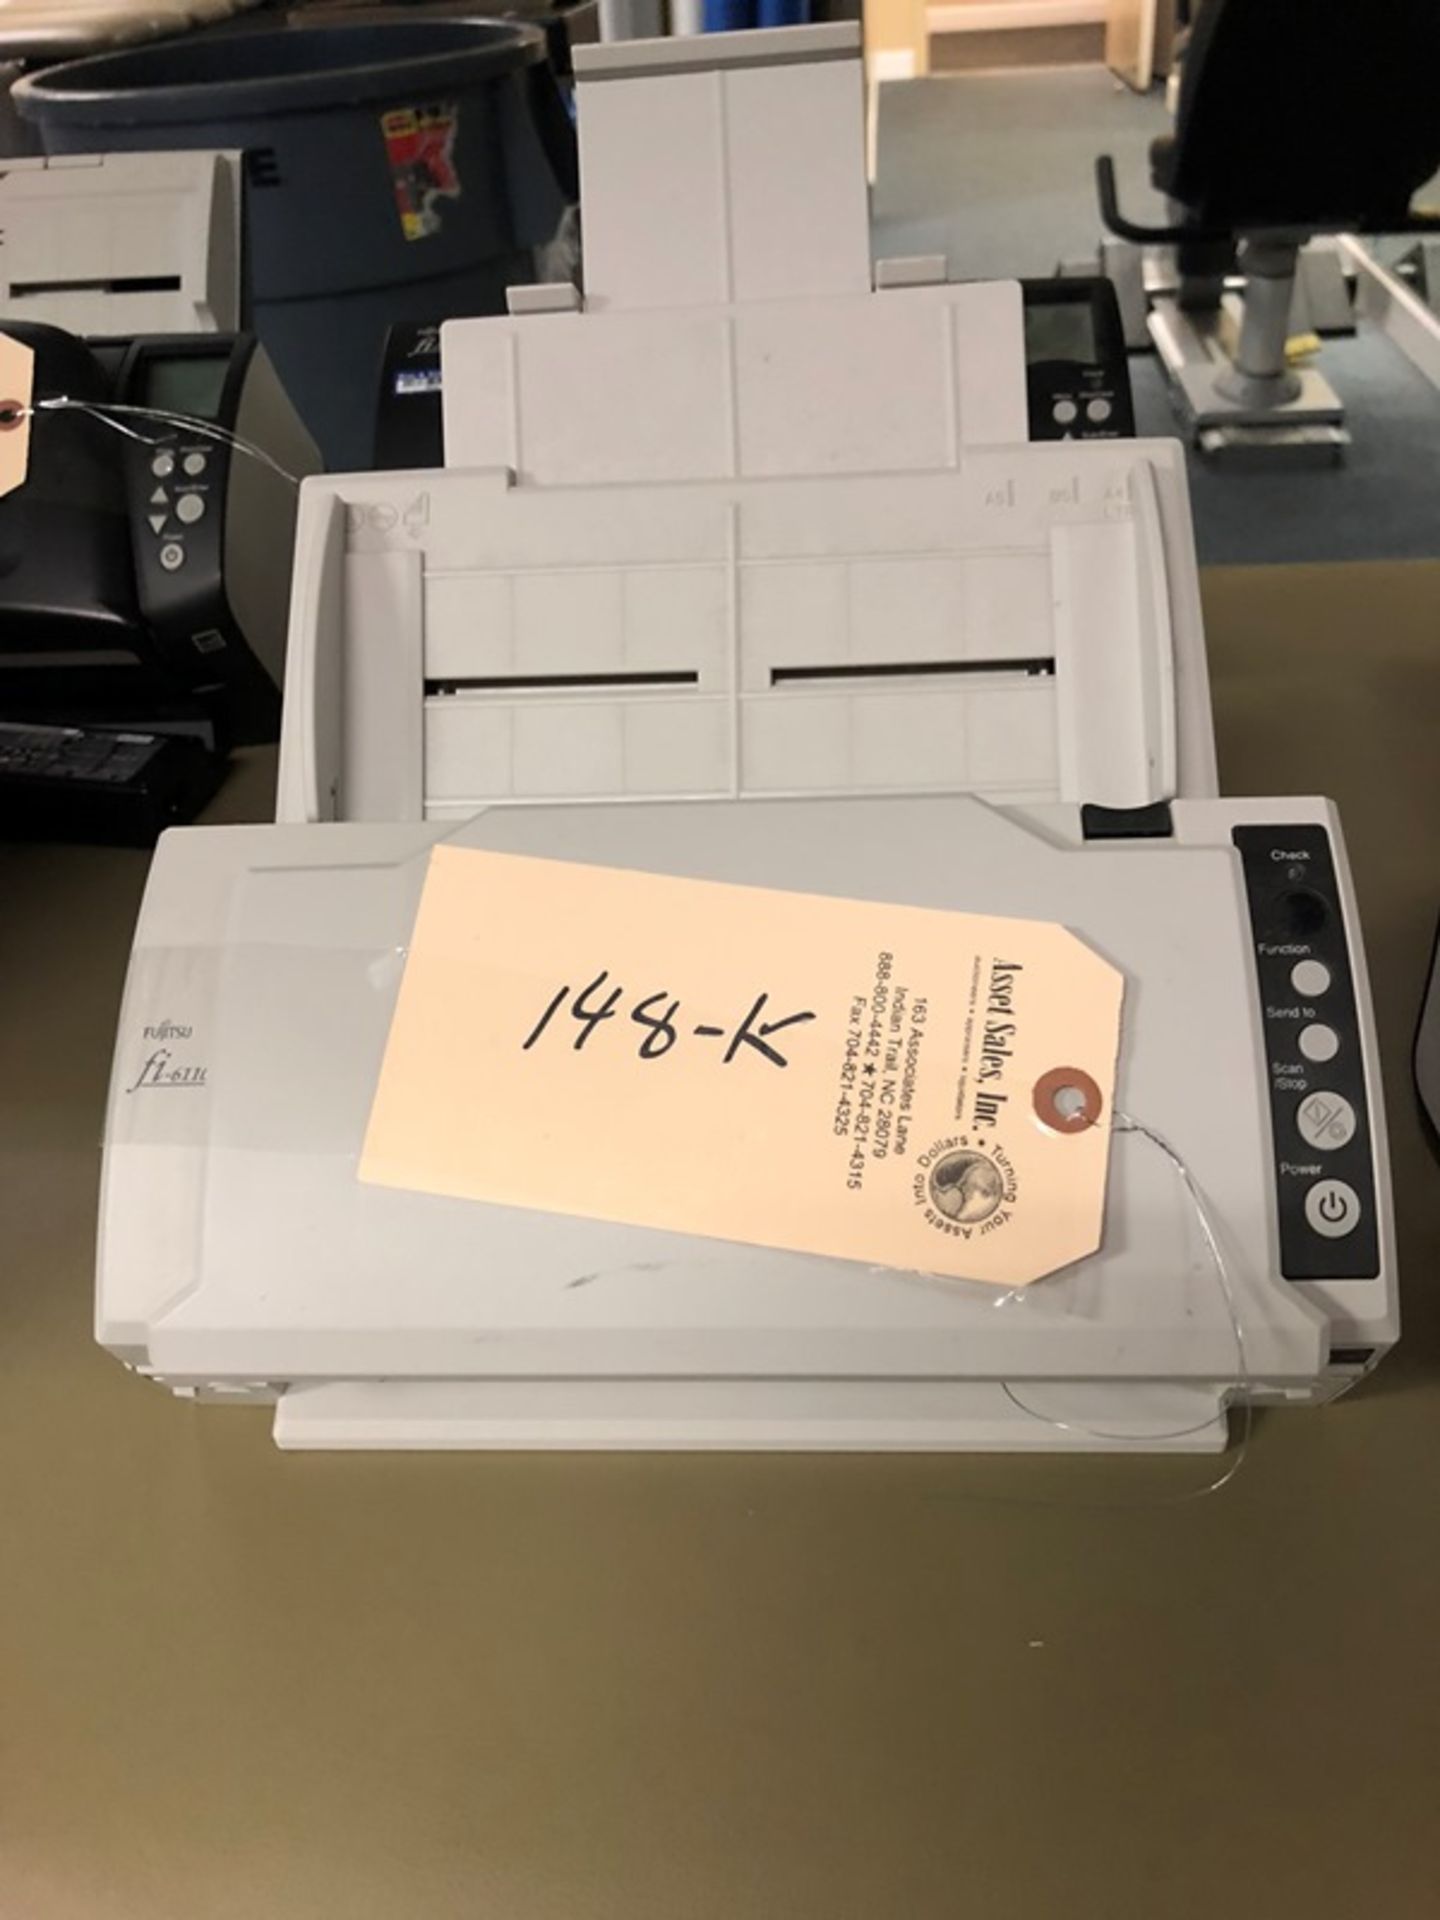 Fugitsu Model fi-6110 Document Scanner *located Oak Lawn, IL